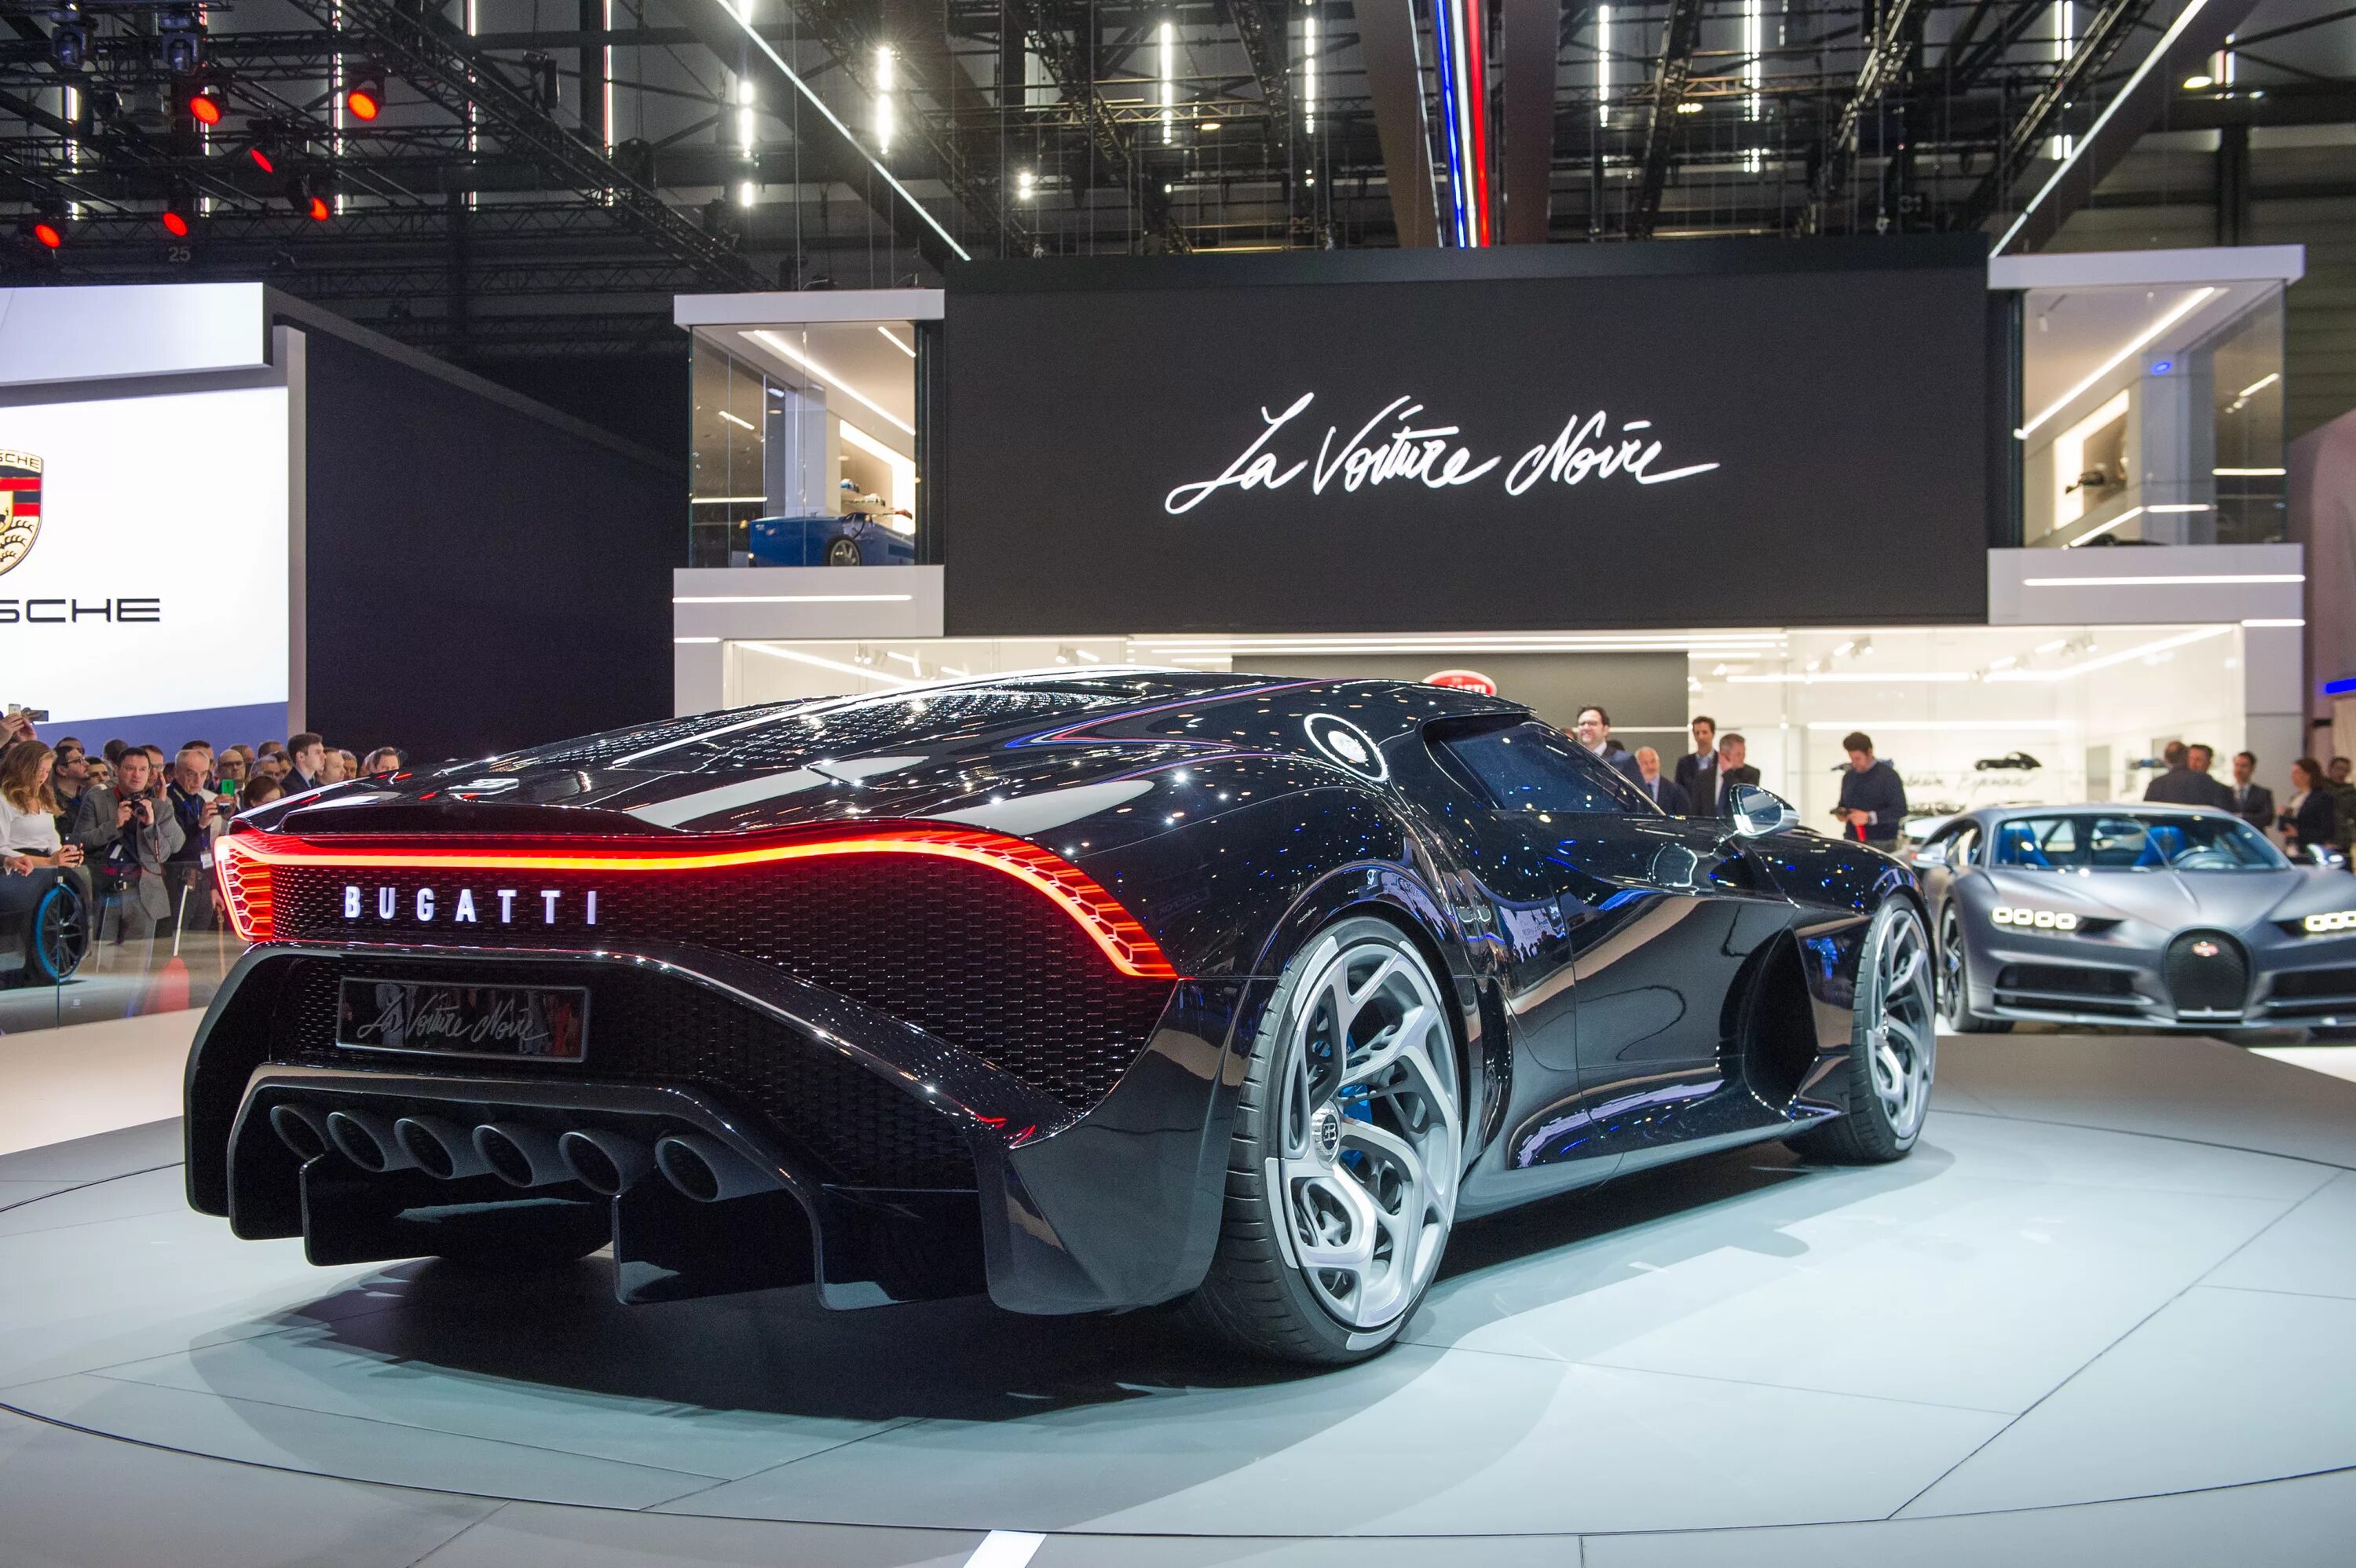 Big best cars. Бугатти концепт 2019. Машина Bugatti la voiture noire. Бугатти 2020 Нойре. Bugatti Женева 2019.